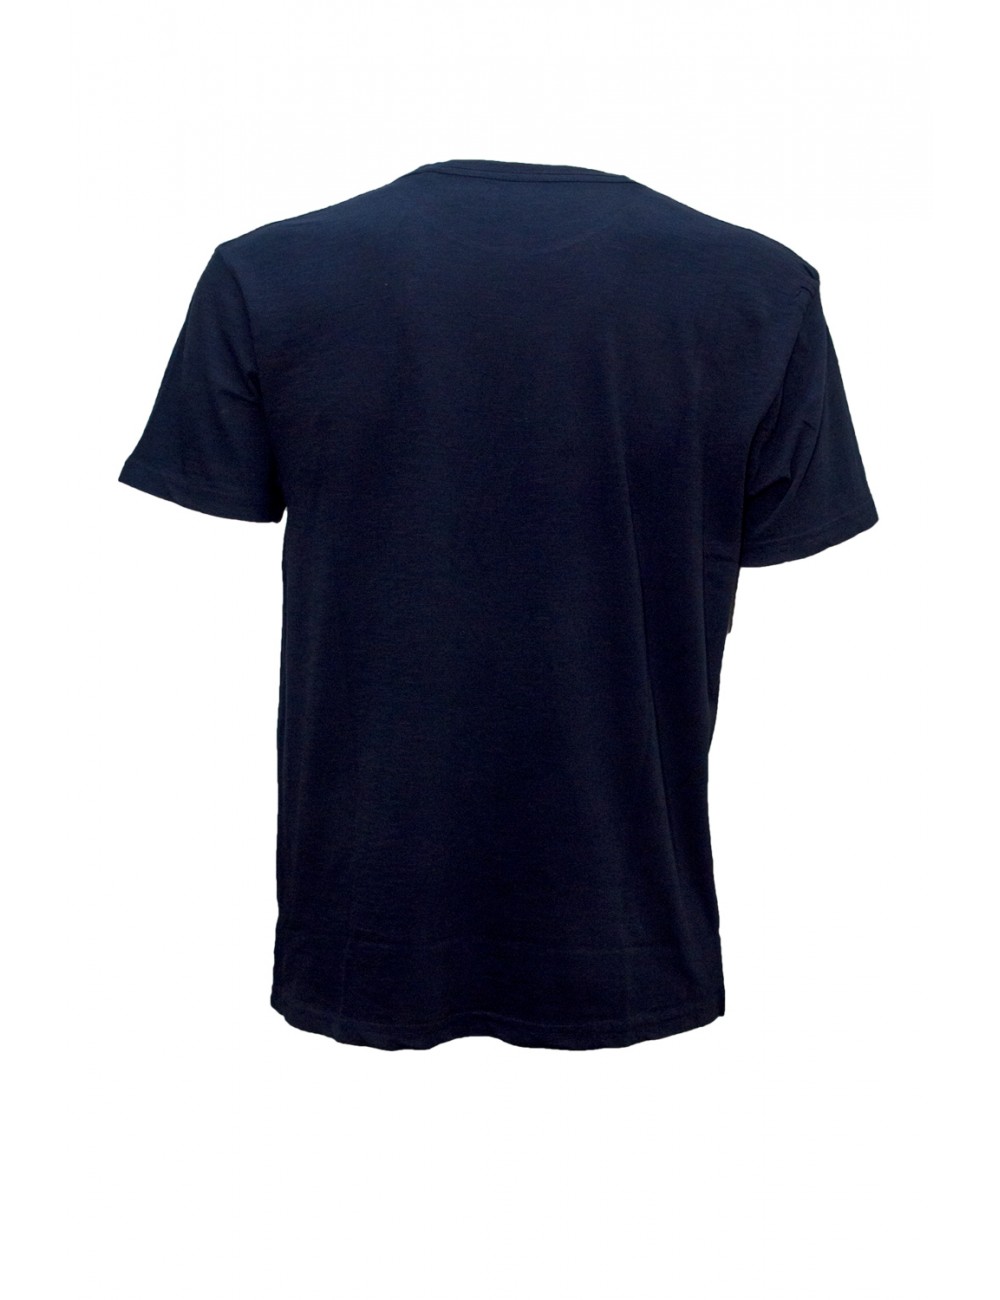 t-shirt censured UOMO NIGHT BLUE - TM 3556 T JSSG 205 vista frontale